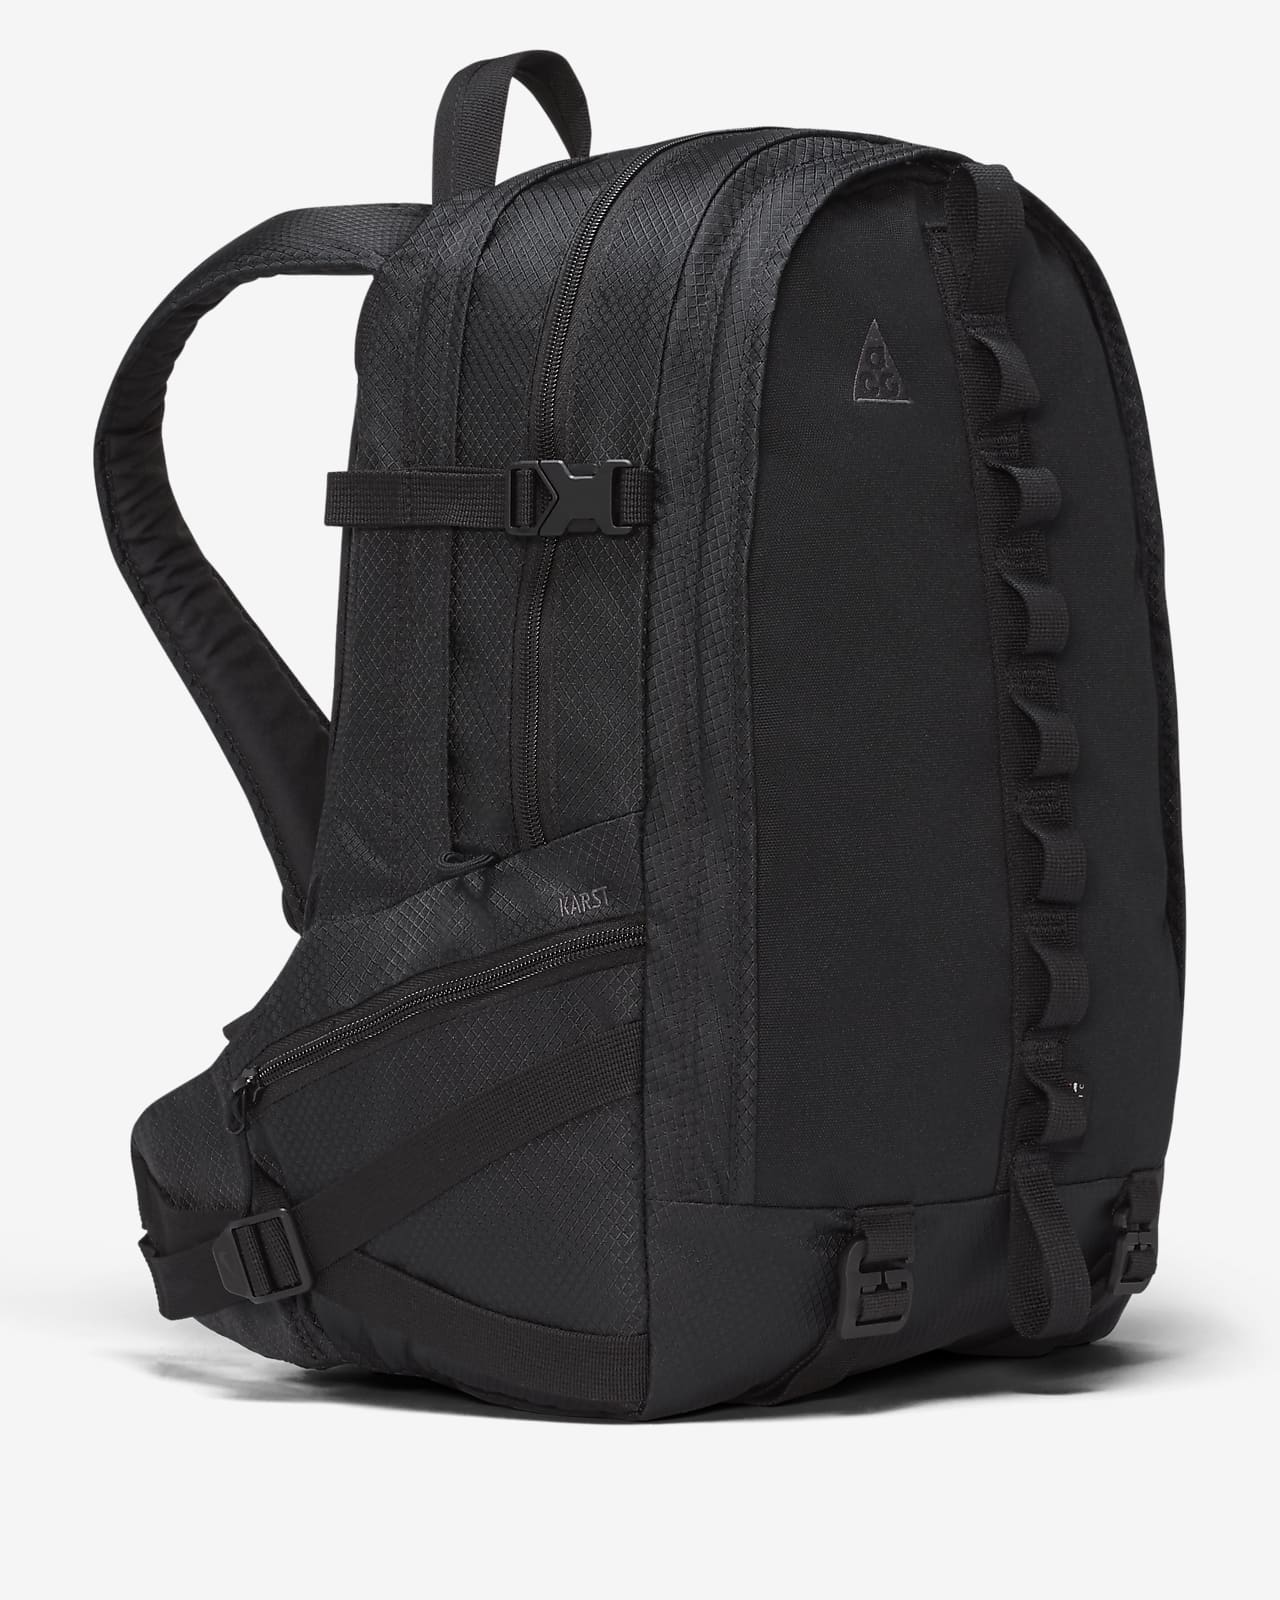 acg backpack